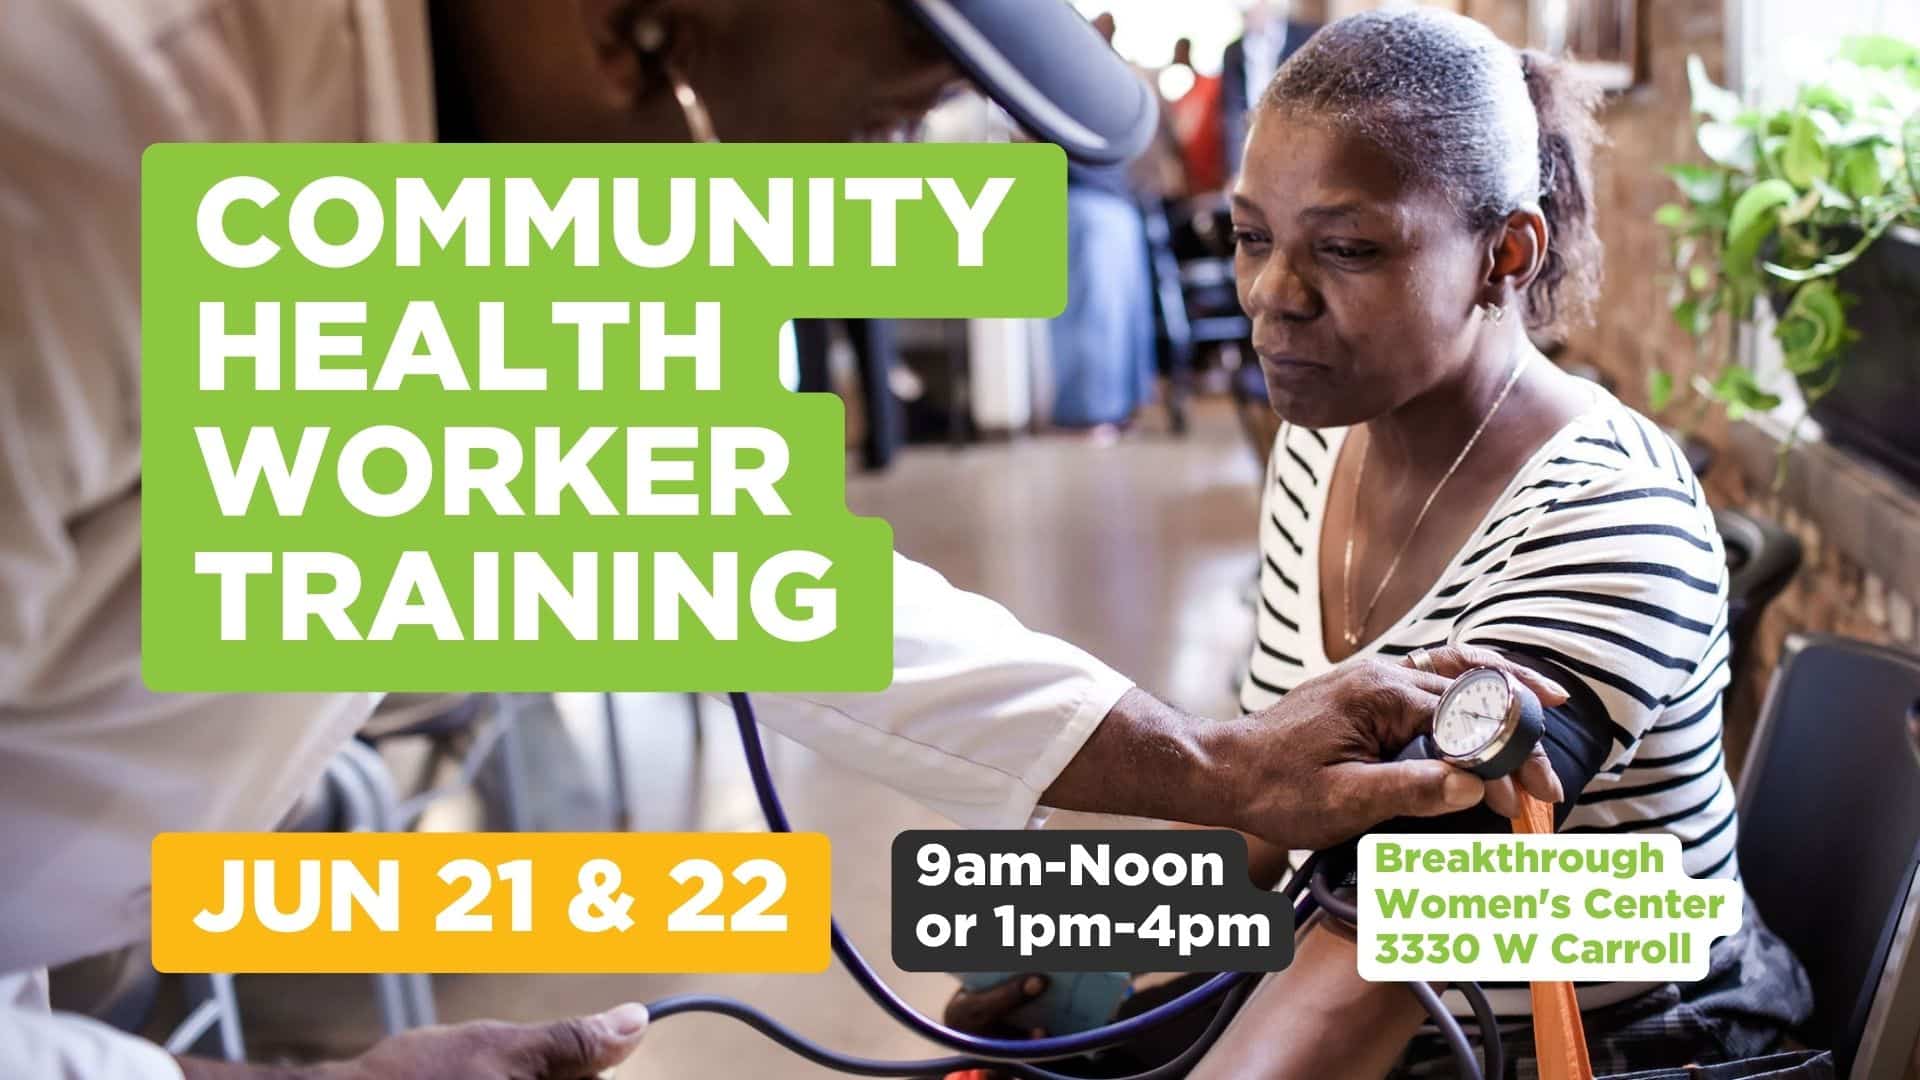 Community Health Worker training